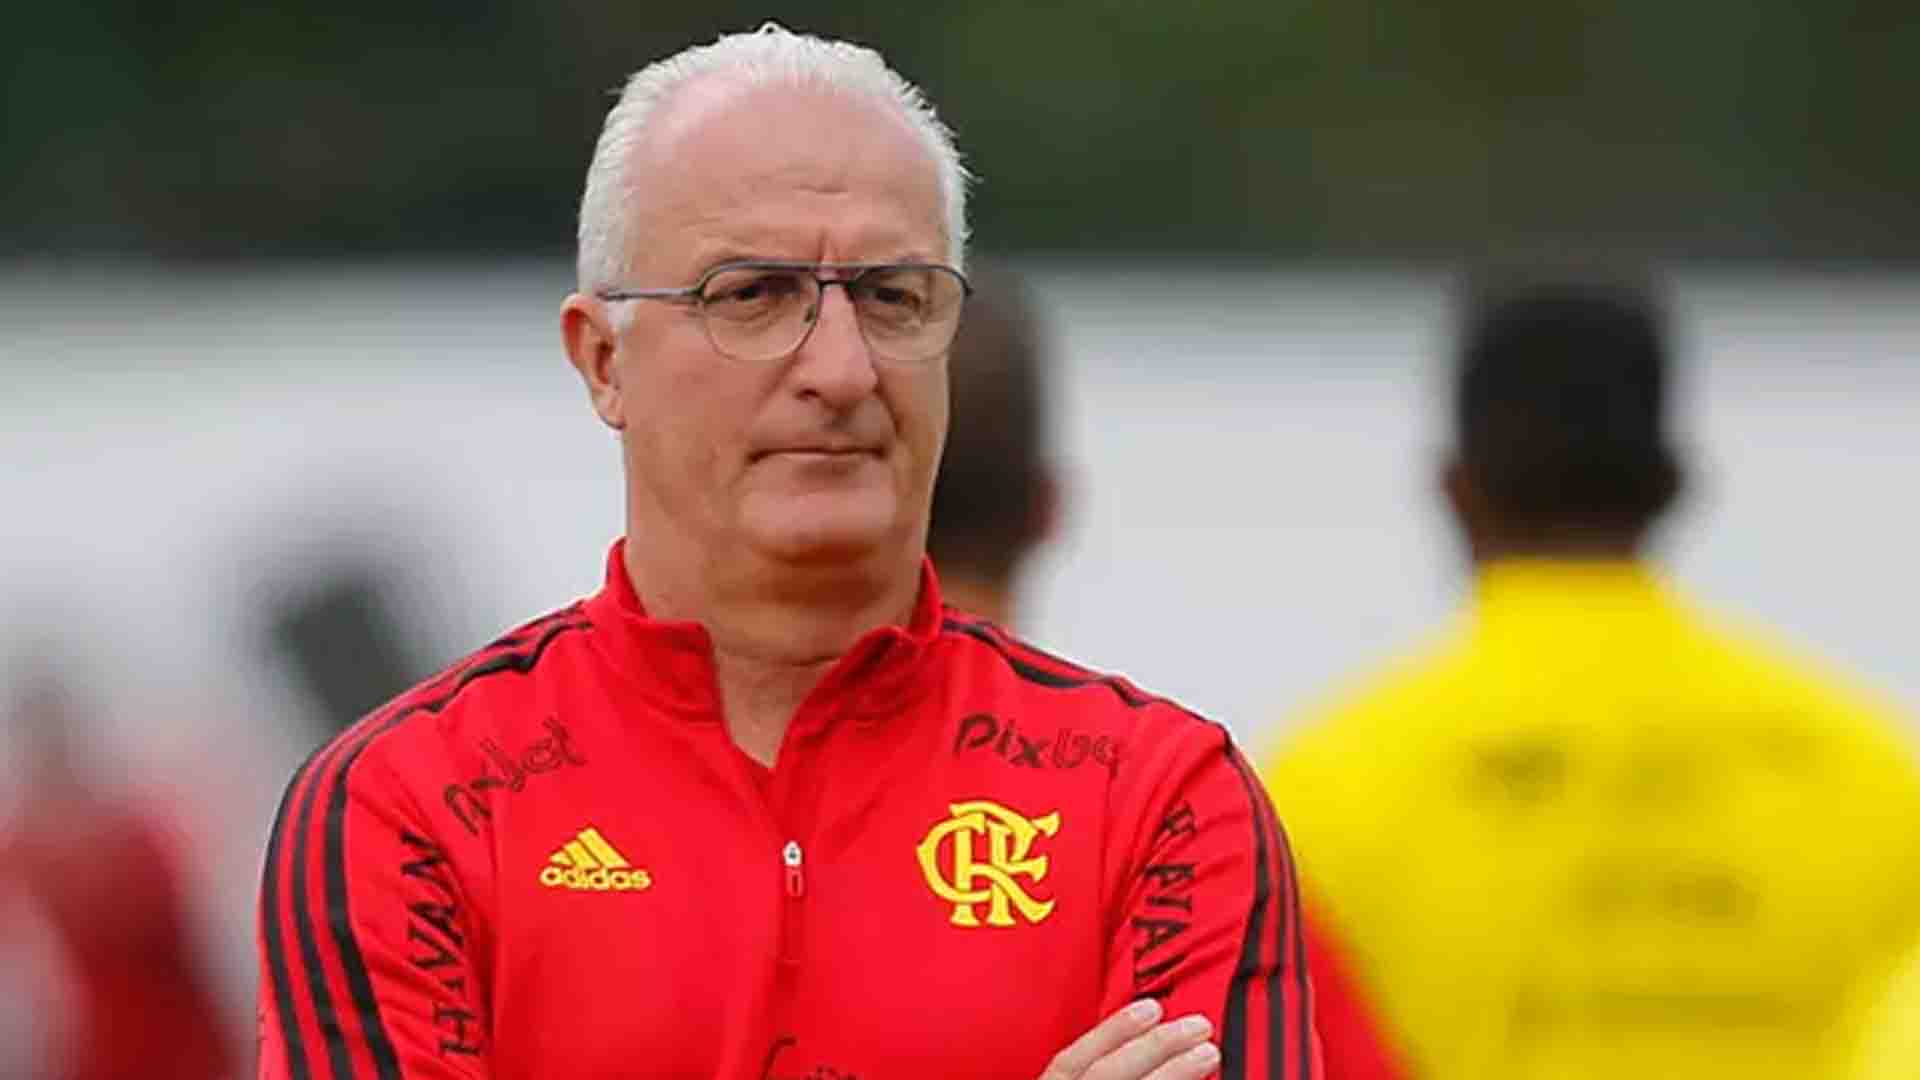 Com Dorival, Flamengo emplaca série invicta, volta a brilhar e mira títulos